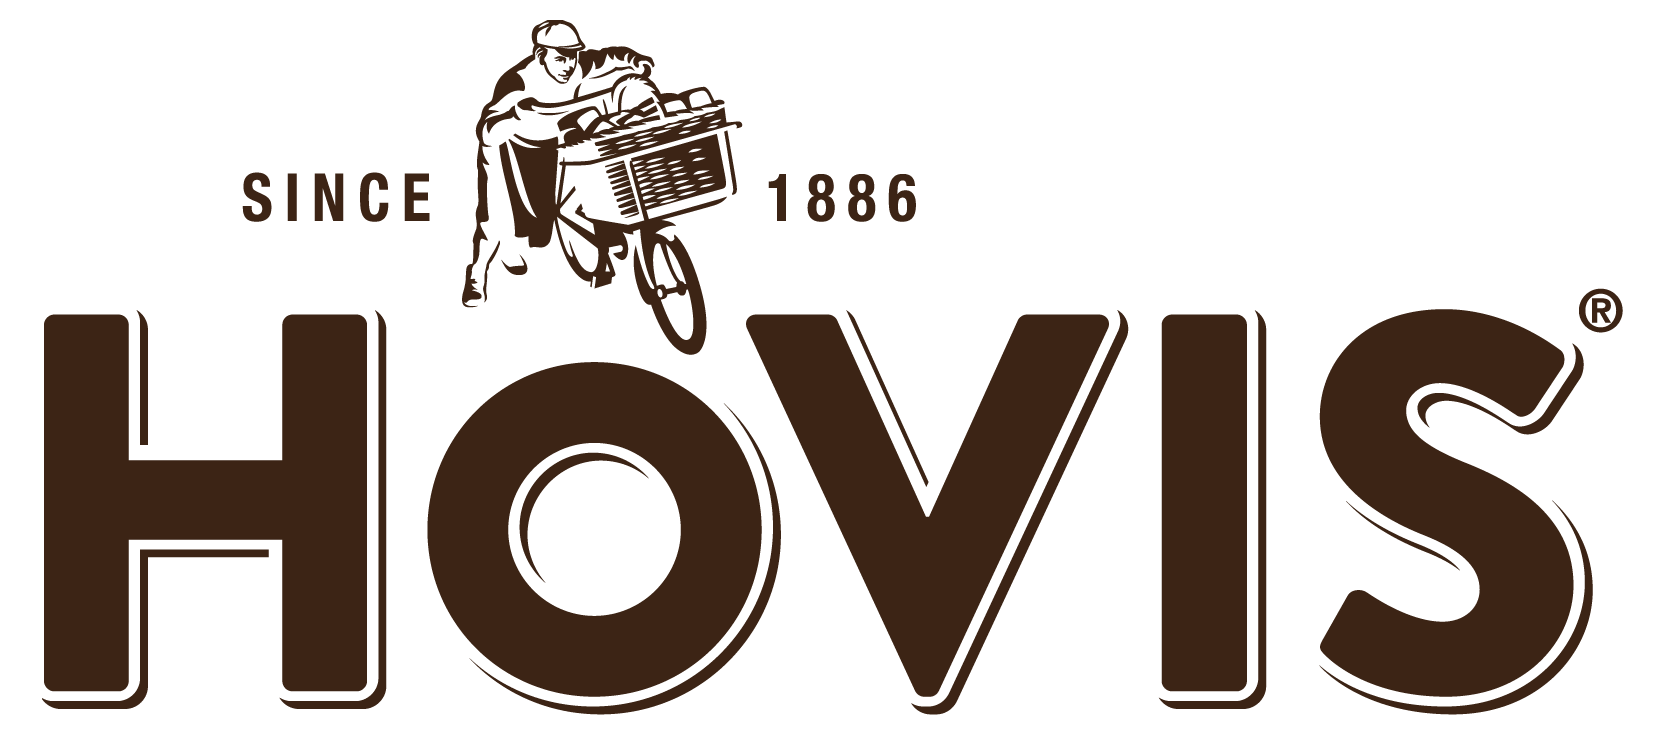 Hovis-2022-logo_23